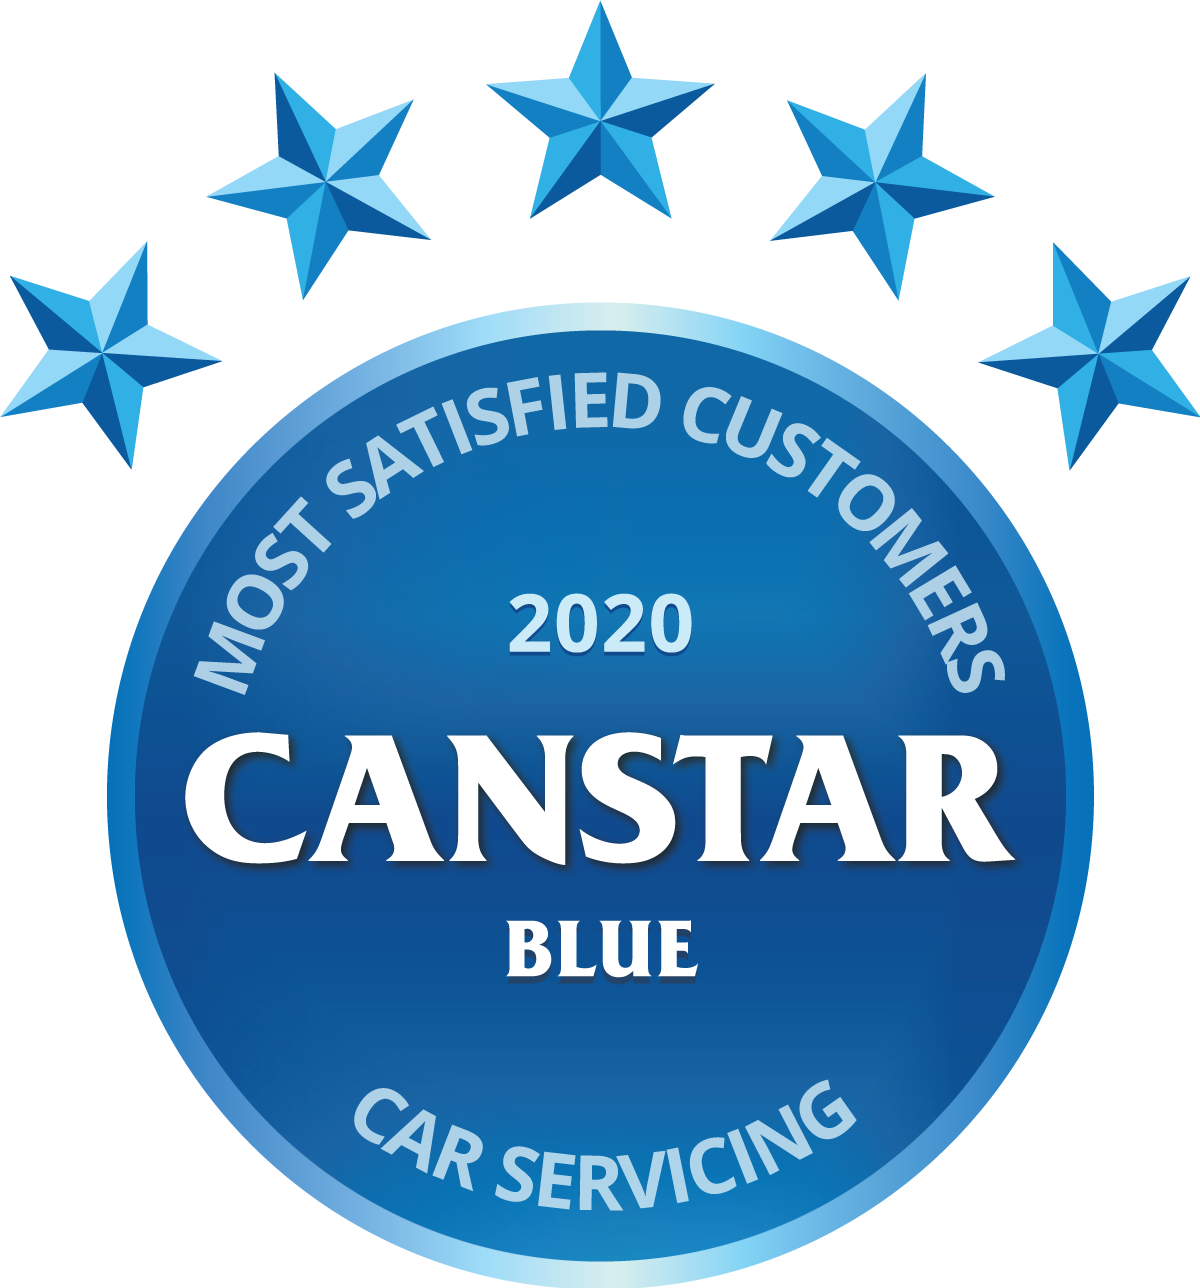 Canstar Blue Award for car servicing